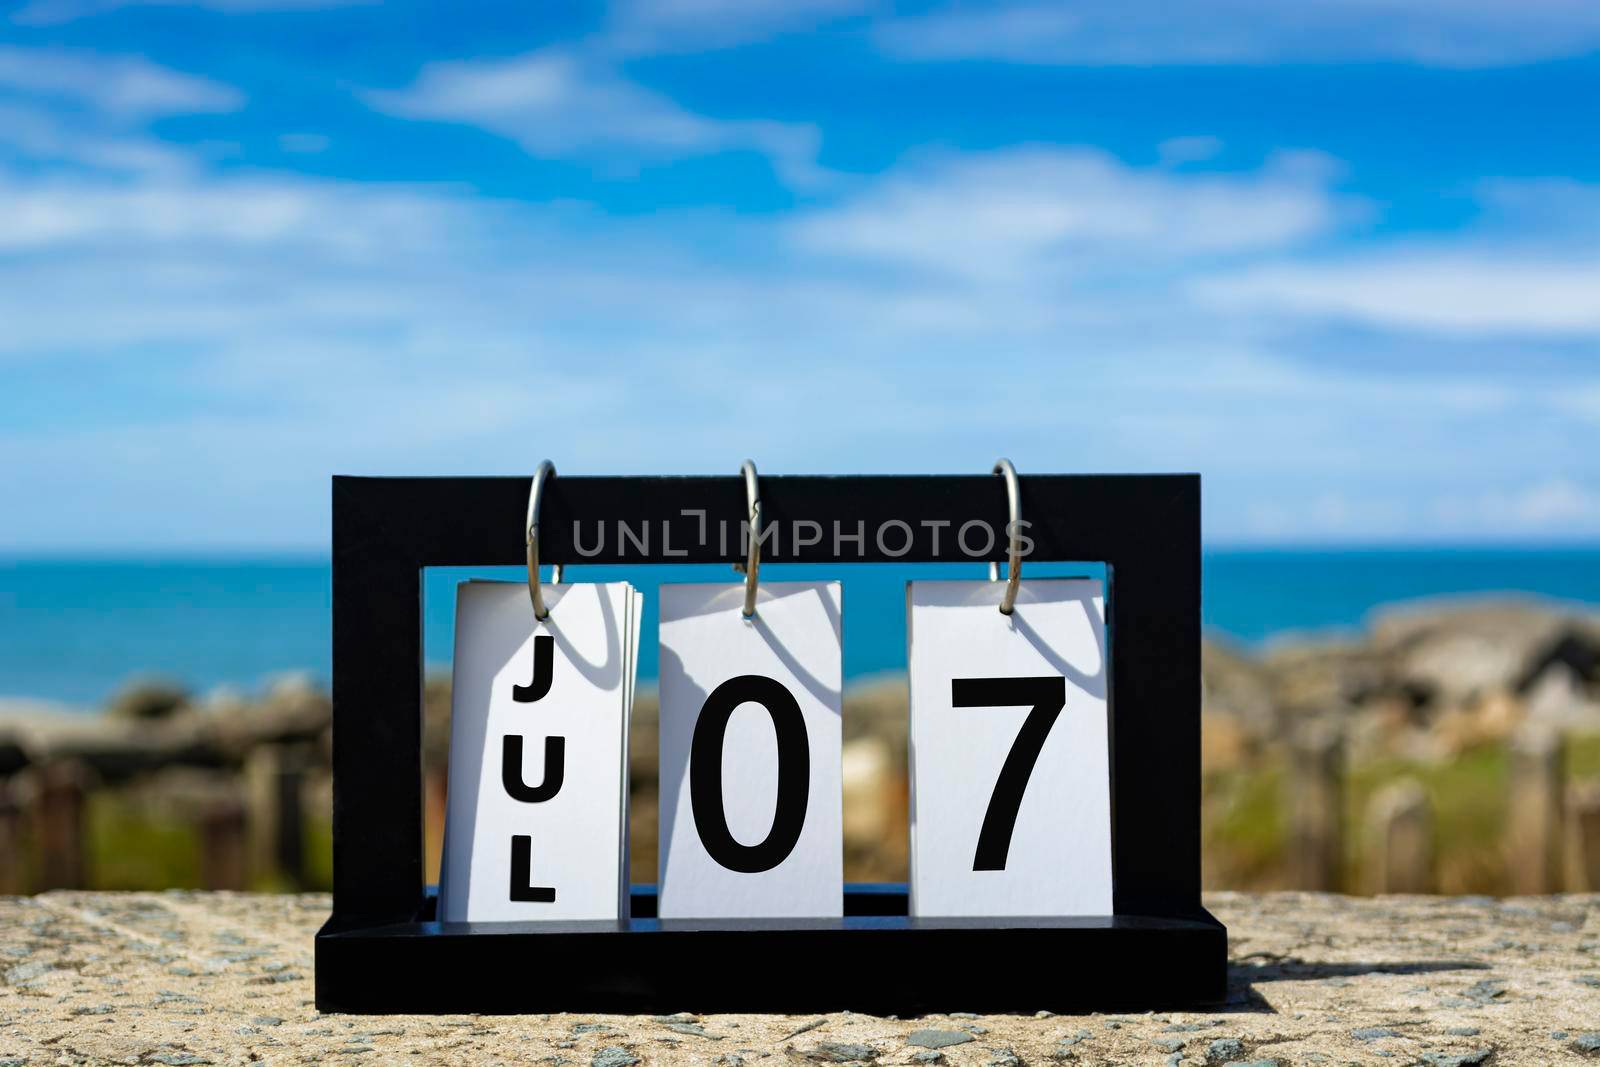 Jul 07 calendar date text on wooden frame with blurred background of ocean. Calendar date concept.